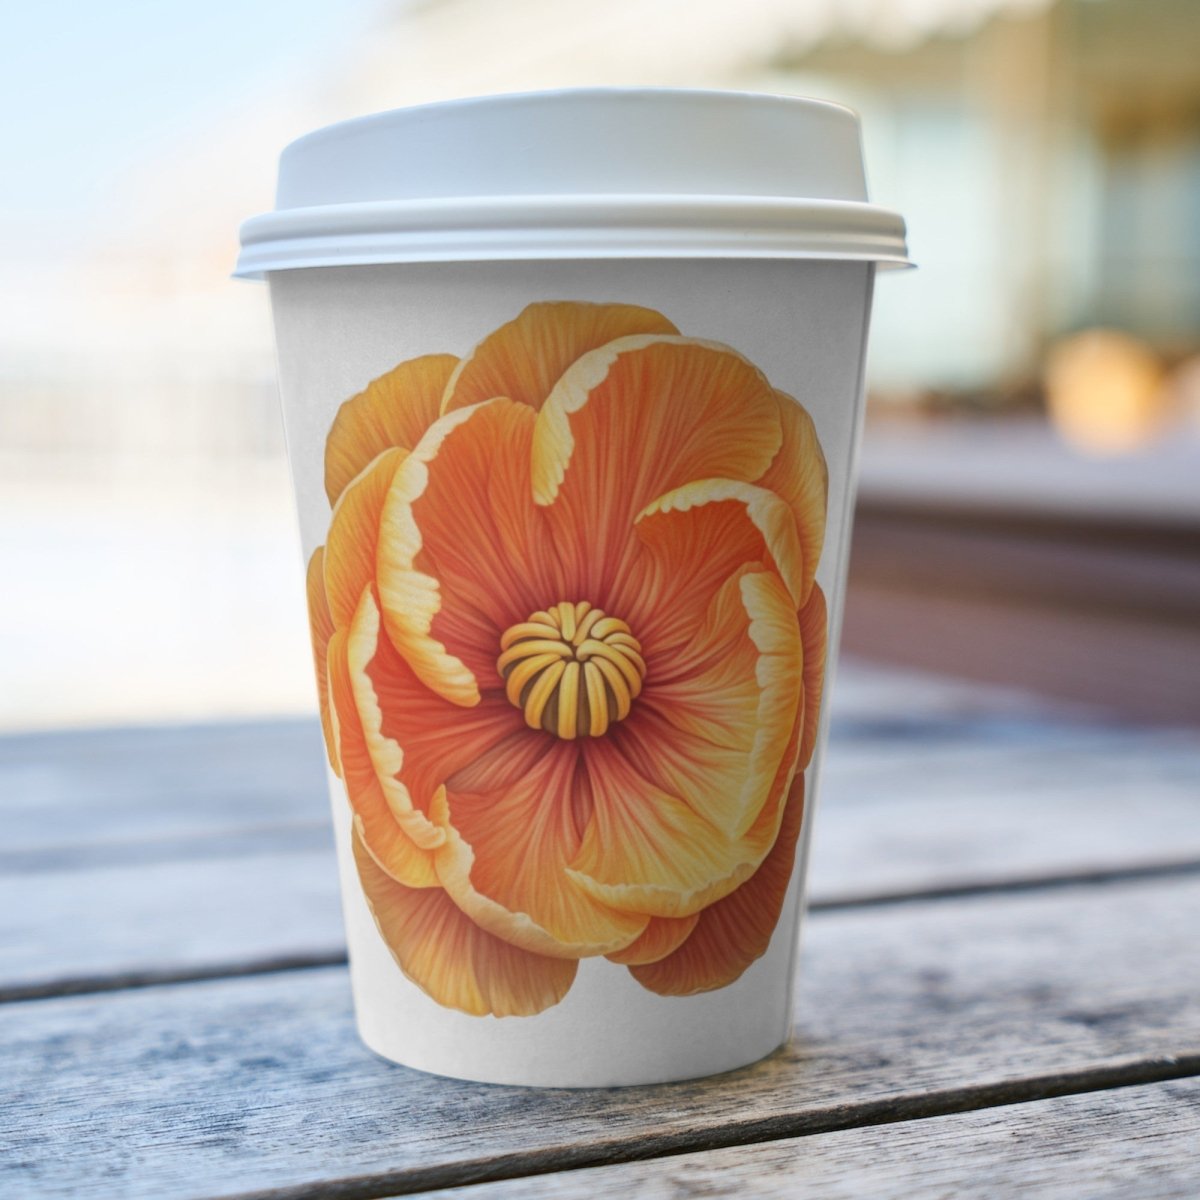 Orange Tulip Blossom 6+6 PNG Clipart Bundle, Transparent Background, Photorealistic - Everything Pixel